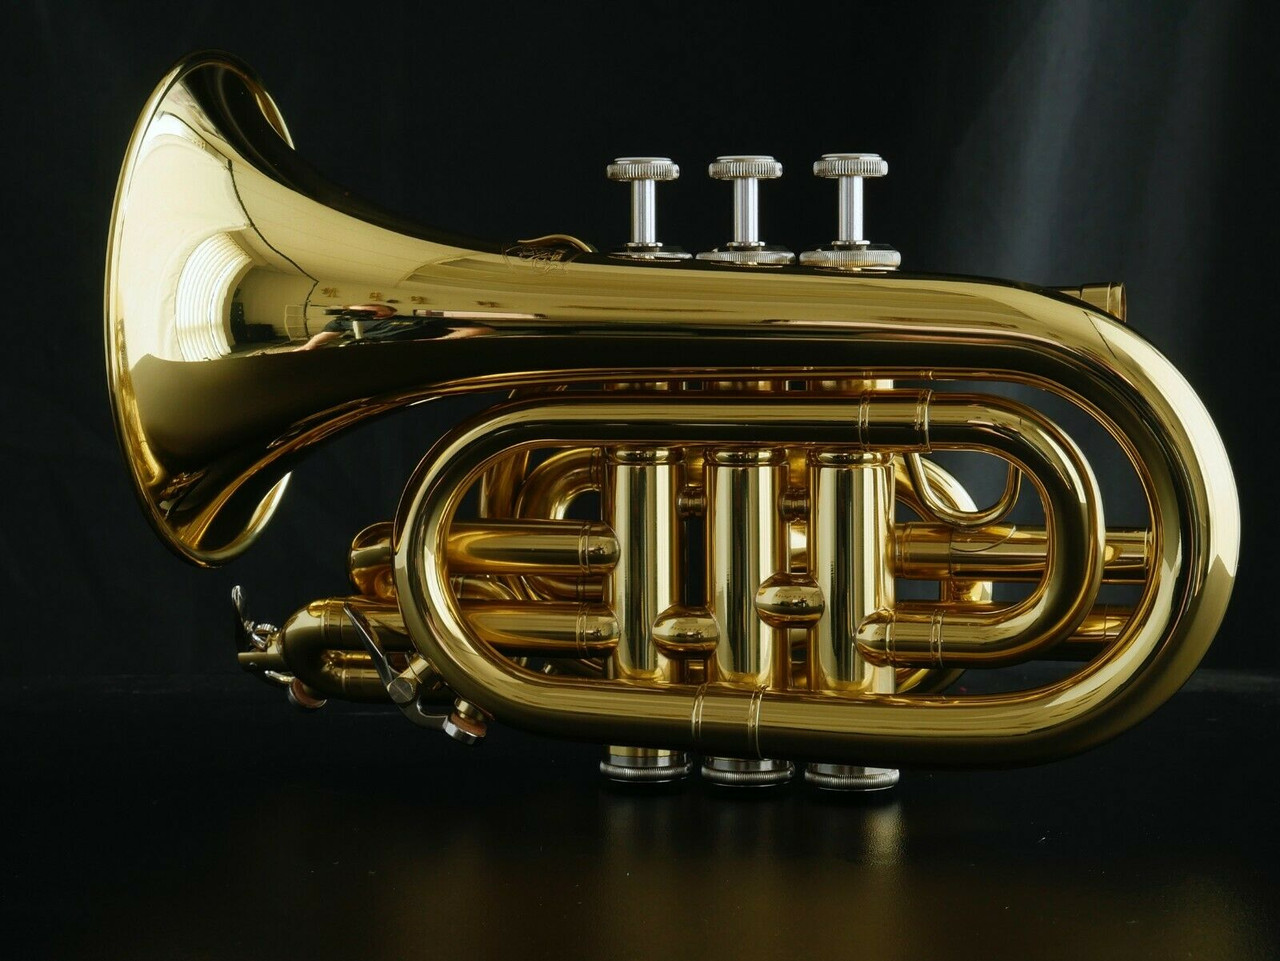 Brasspire Pocket Trumpet P7: Maybe the best pocket trumpet out